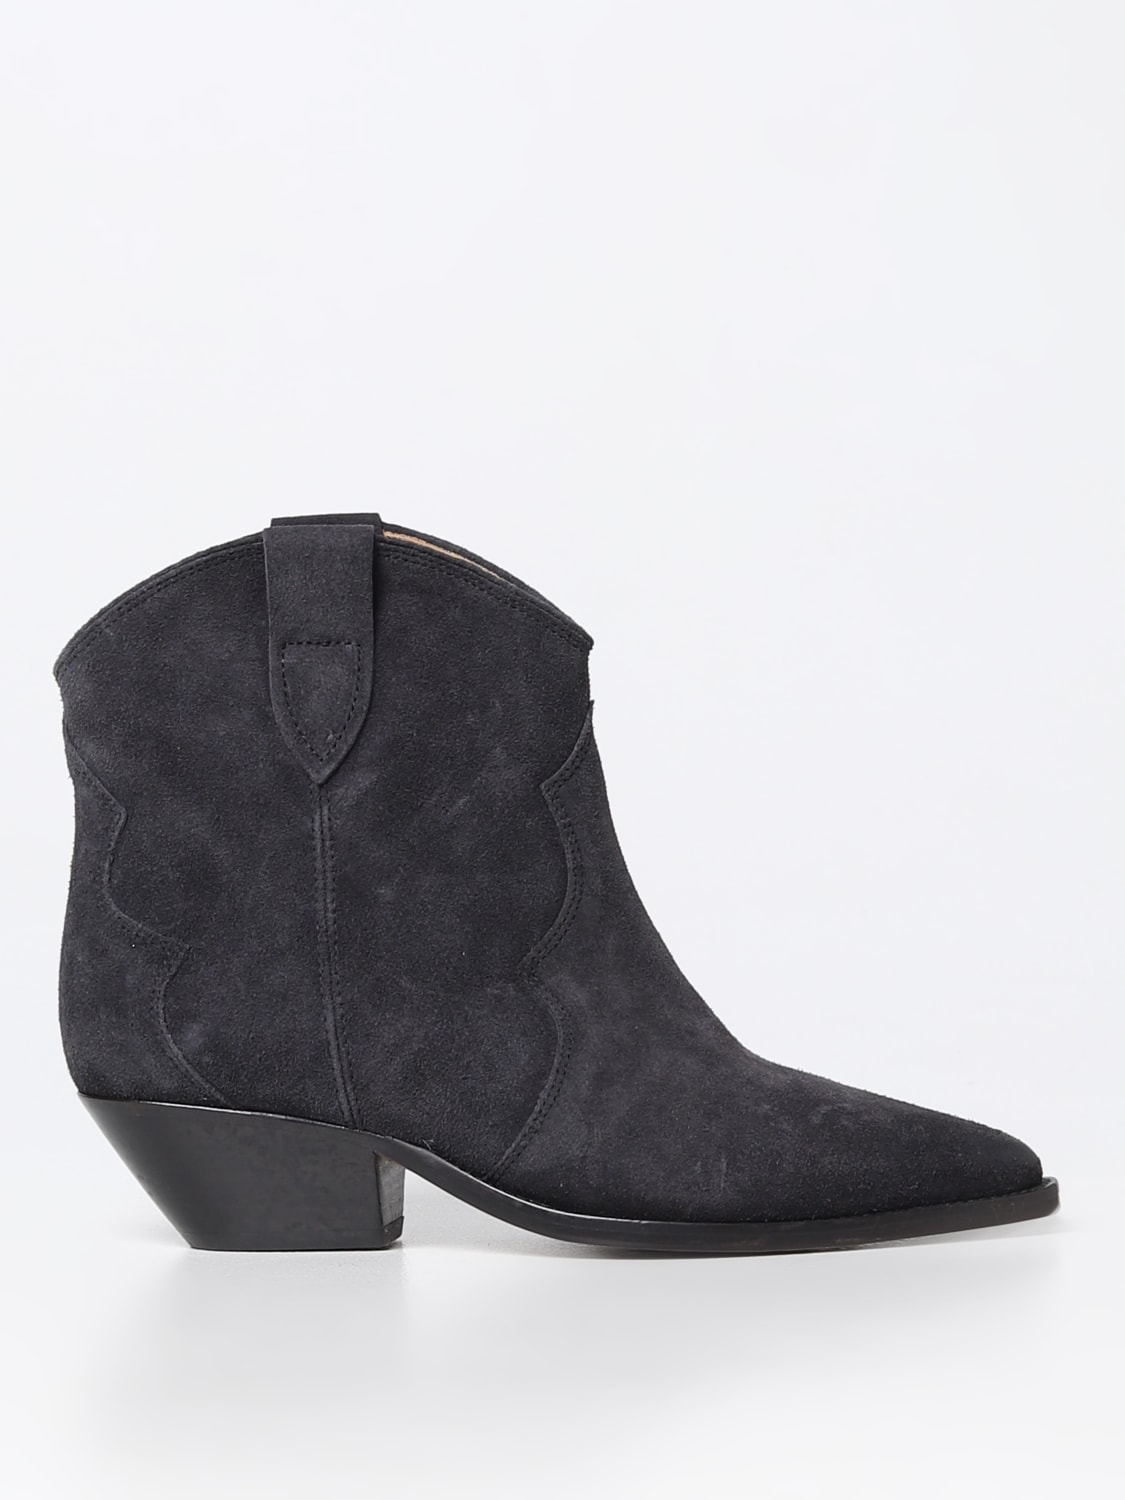 ISABEL MARANT: boots for woman - Black | Isabel Marant boots ...